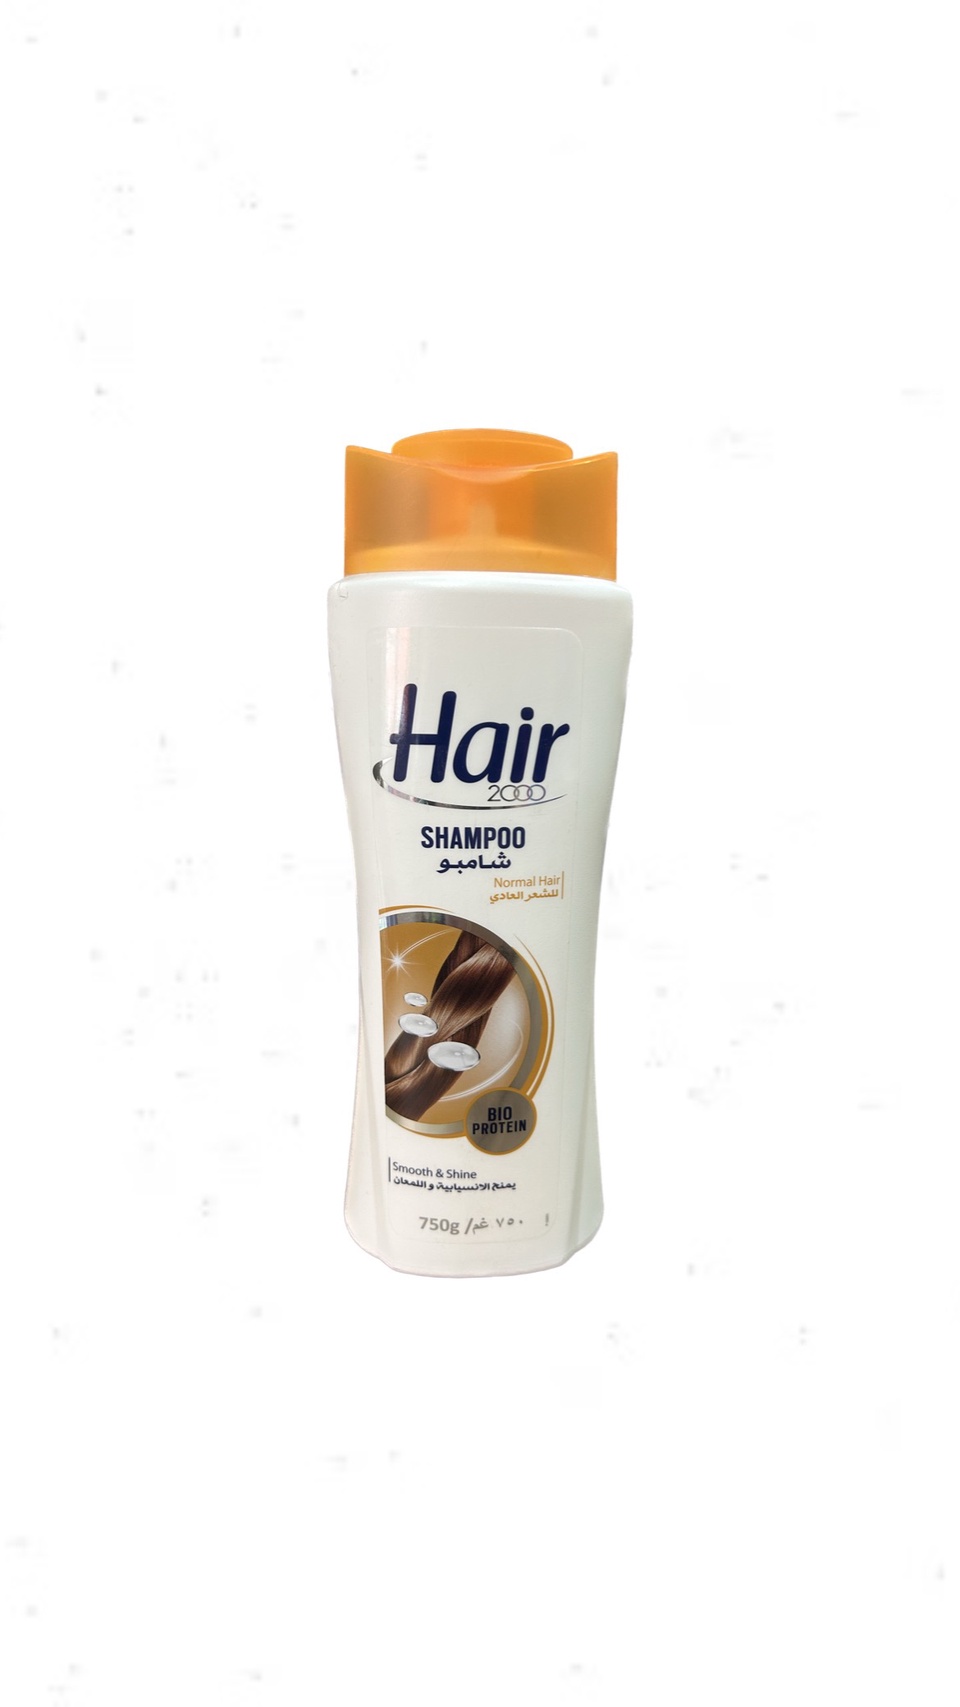 Шампунь Hair для нормальных волос 750 мл - 300 ₽, заказать онлайн.